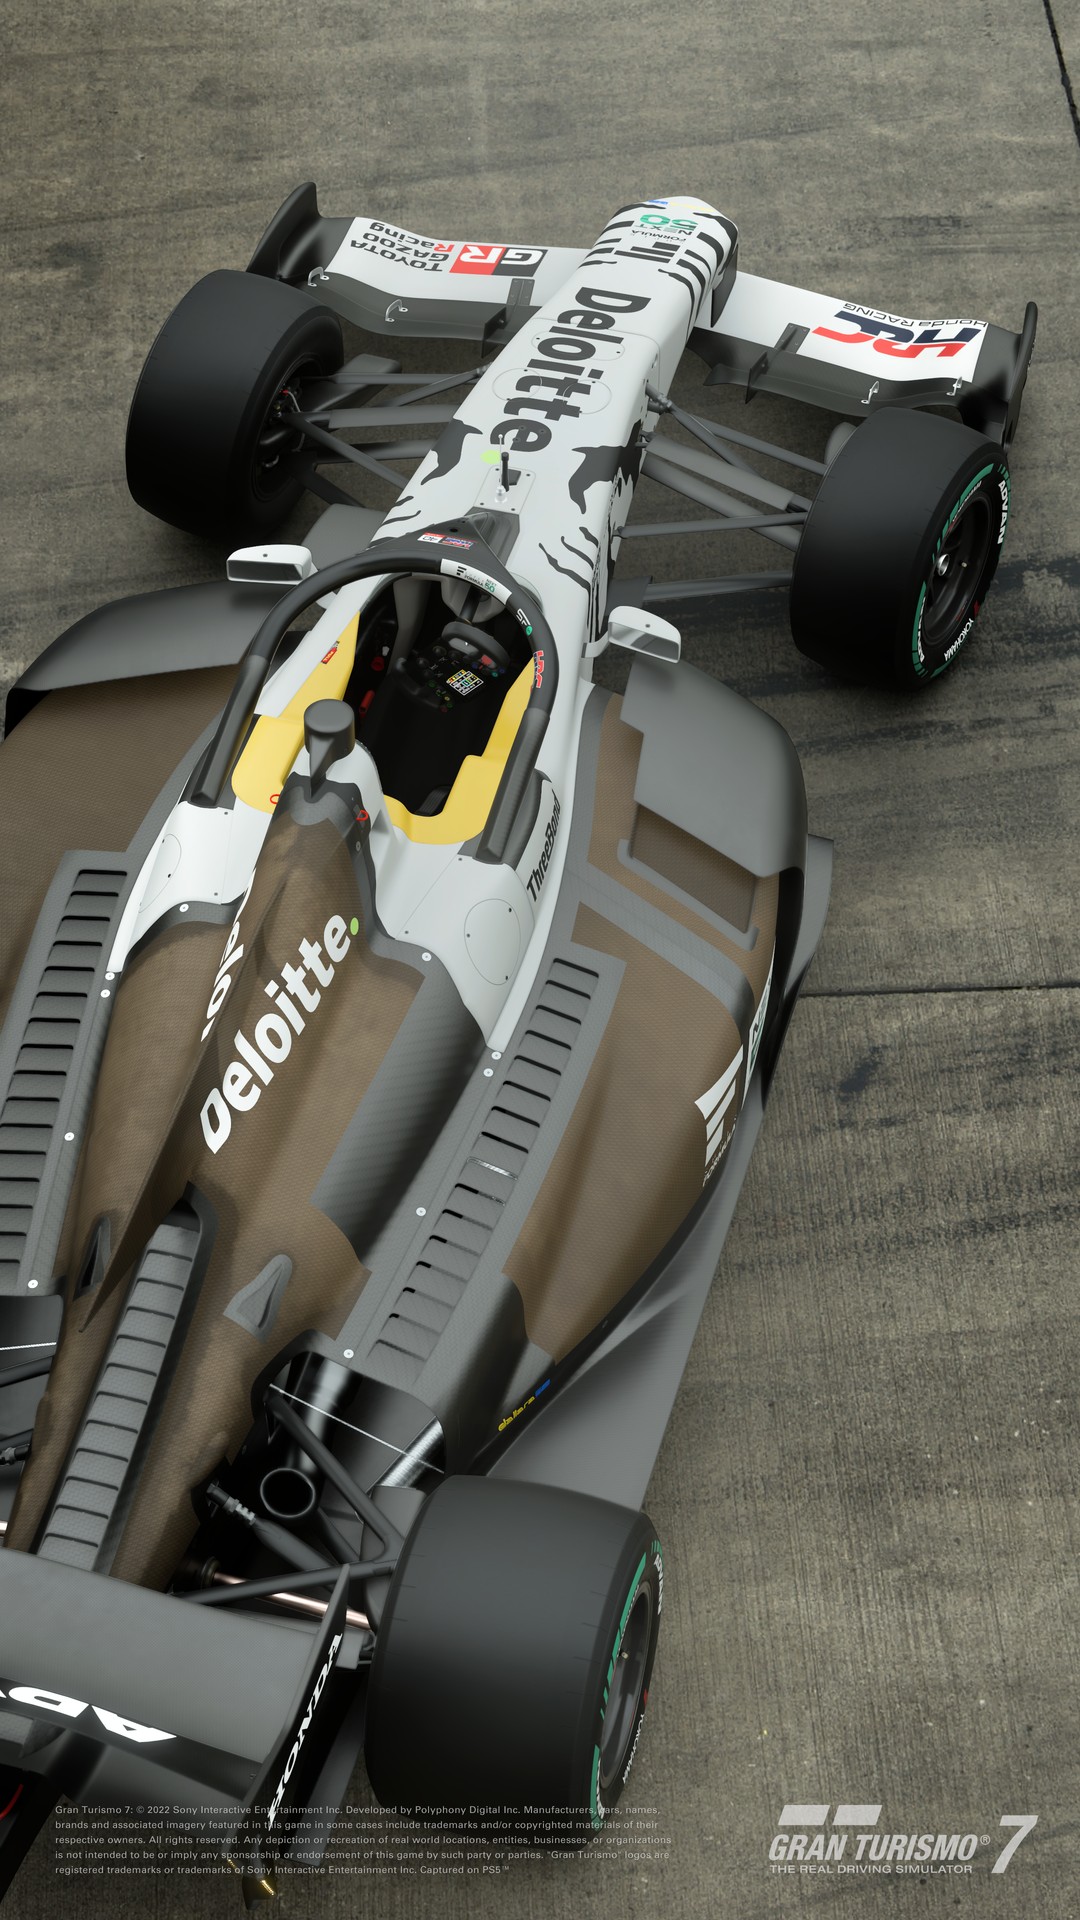 The Gran Turismo 7 April Update: Four New Cars Including the 2023 Super  Formula! : r/granturismo